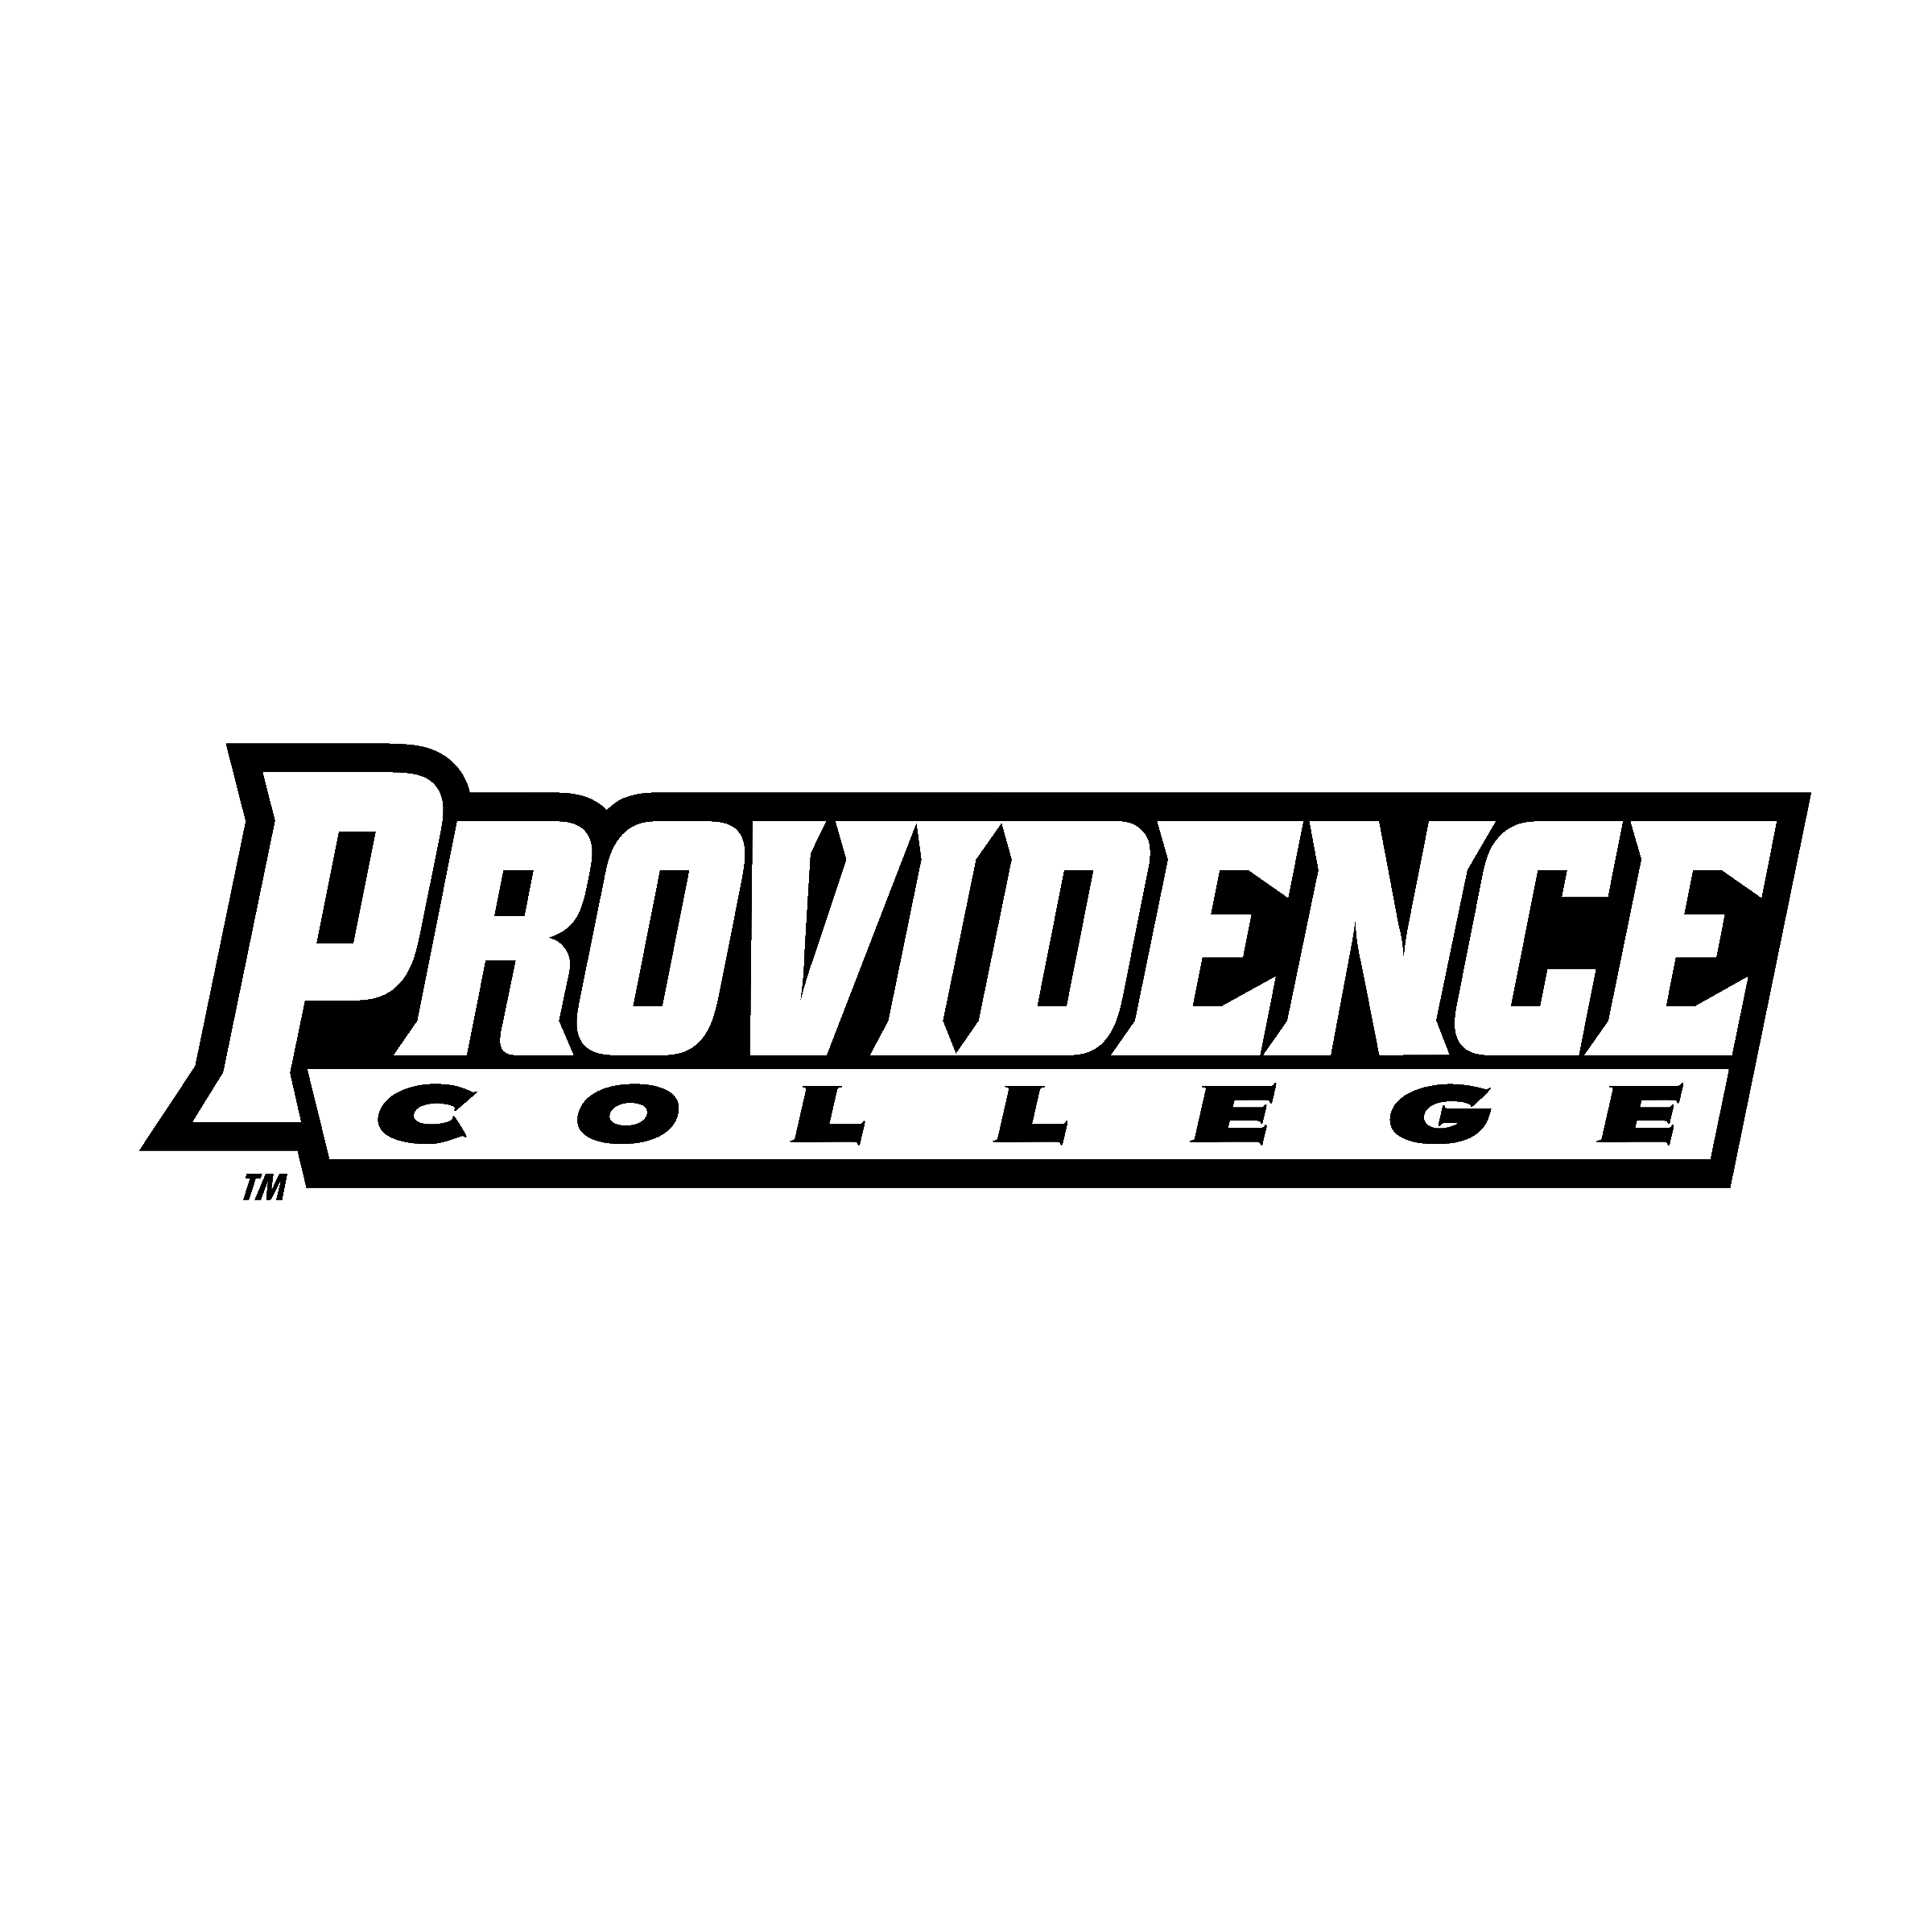 Friars Logo - Providence College Friars Logo PNG Transparent & SVG Vector ...